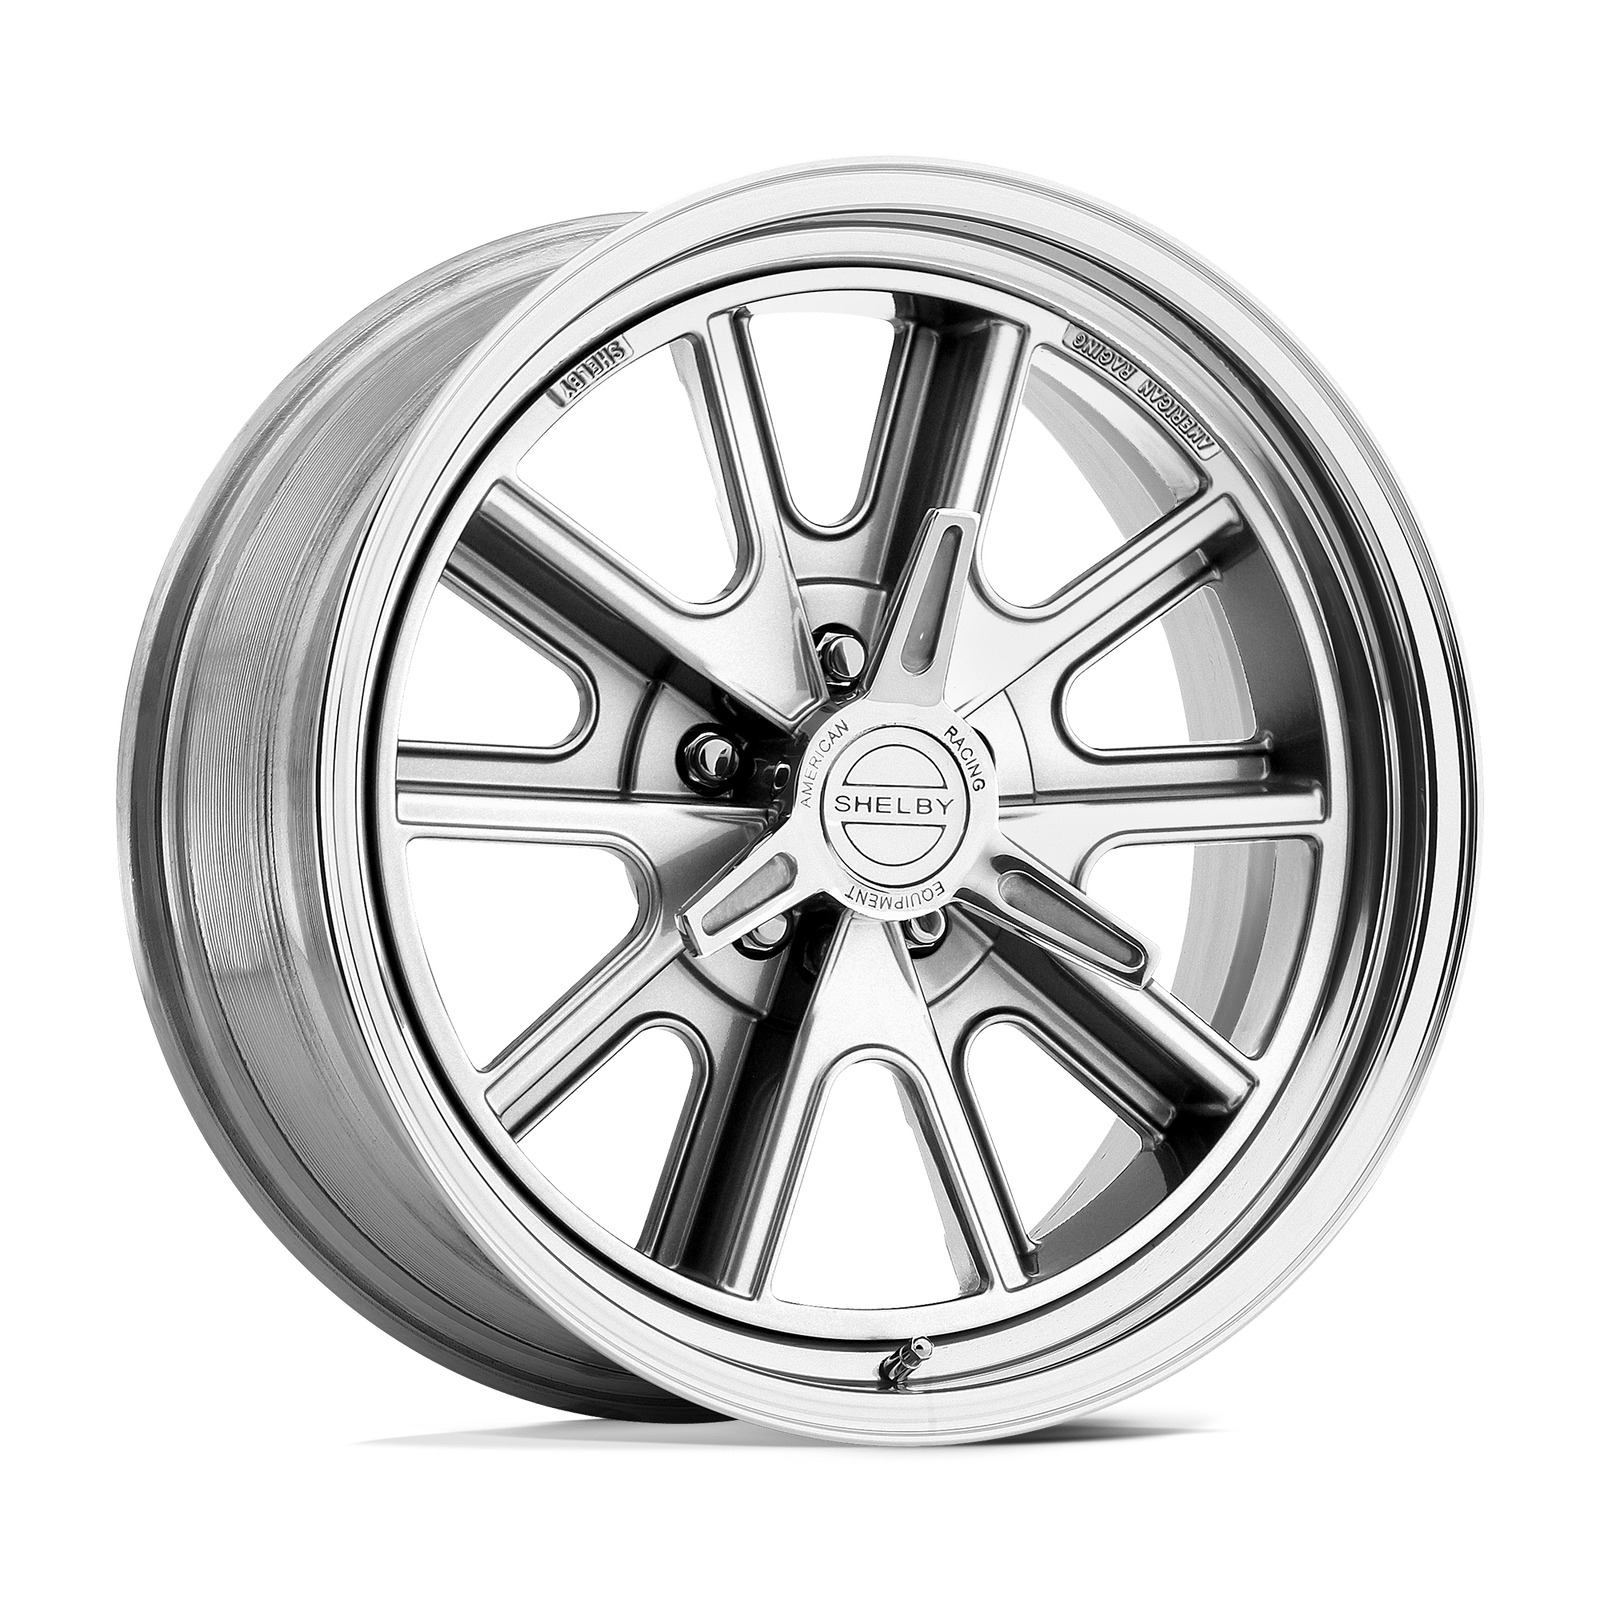 1 New 17x8 American Racing Shelby Cobra Polished Wheel/Rim 5x114.3 17-8 5-114.3